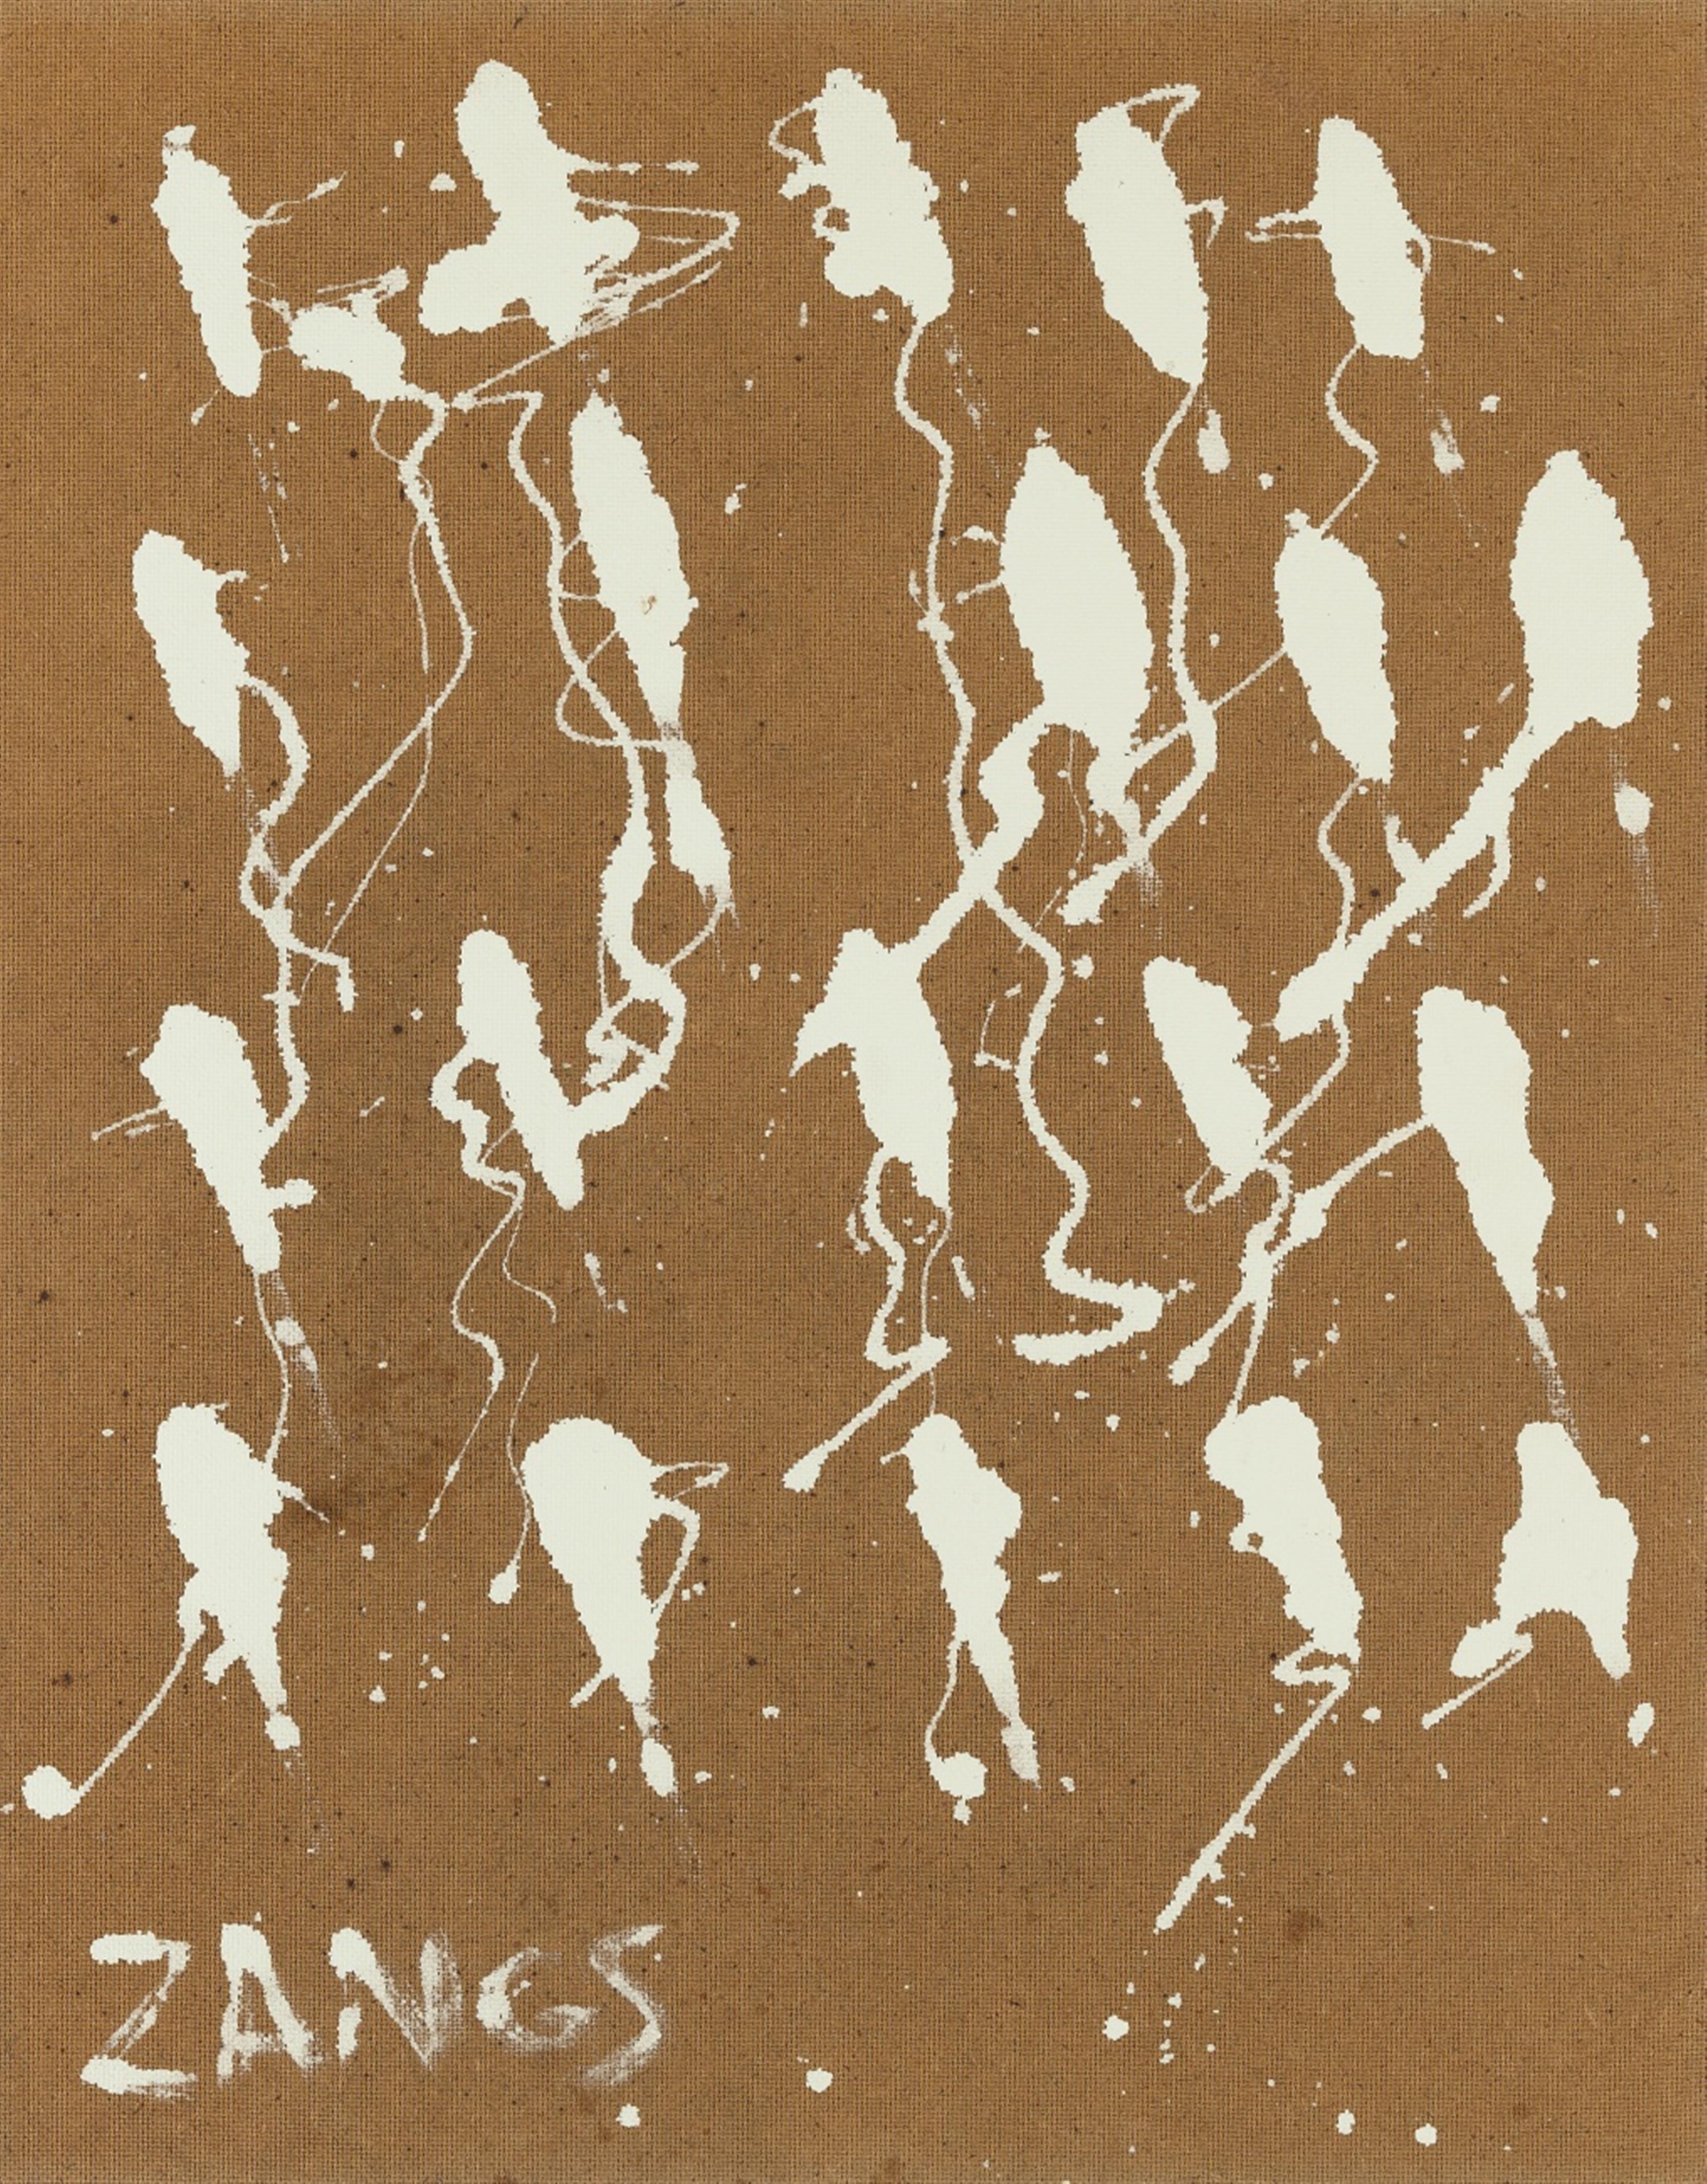 Herbert Zangs - Untitled (Drippingbild) - image-1